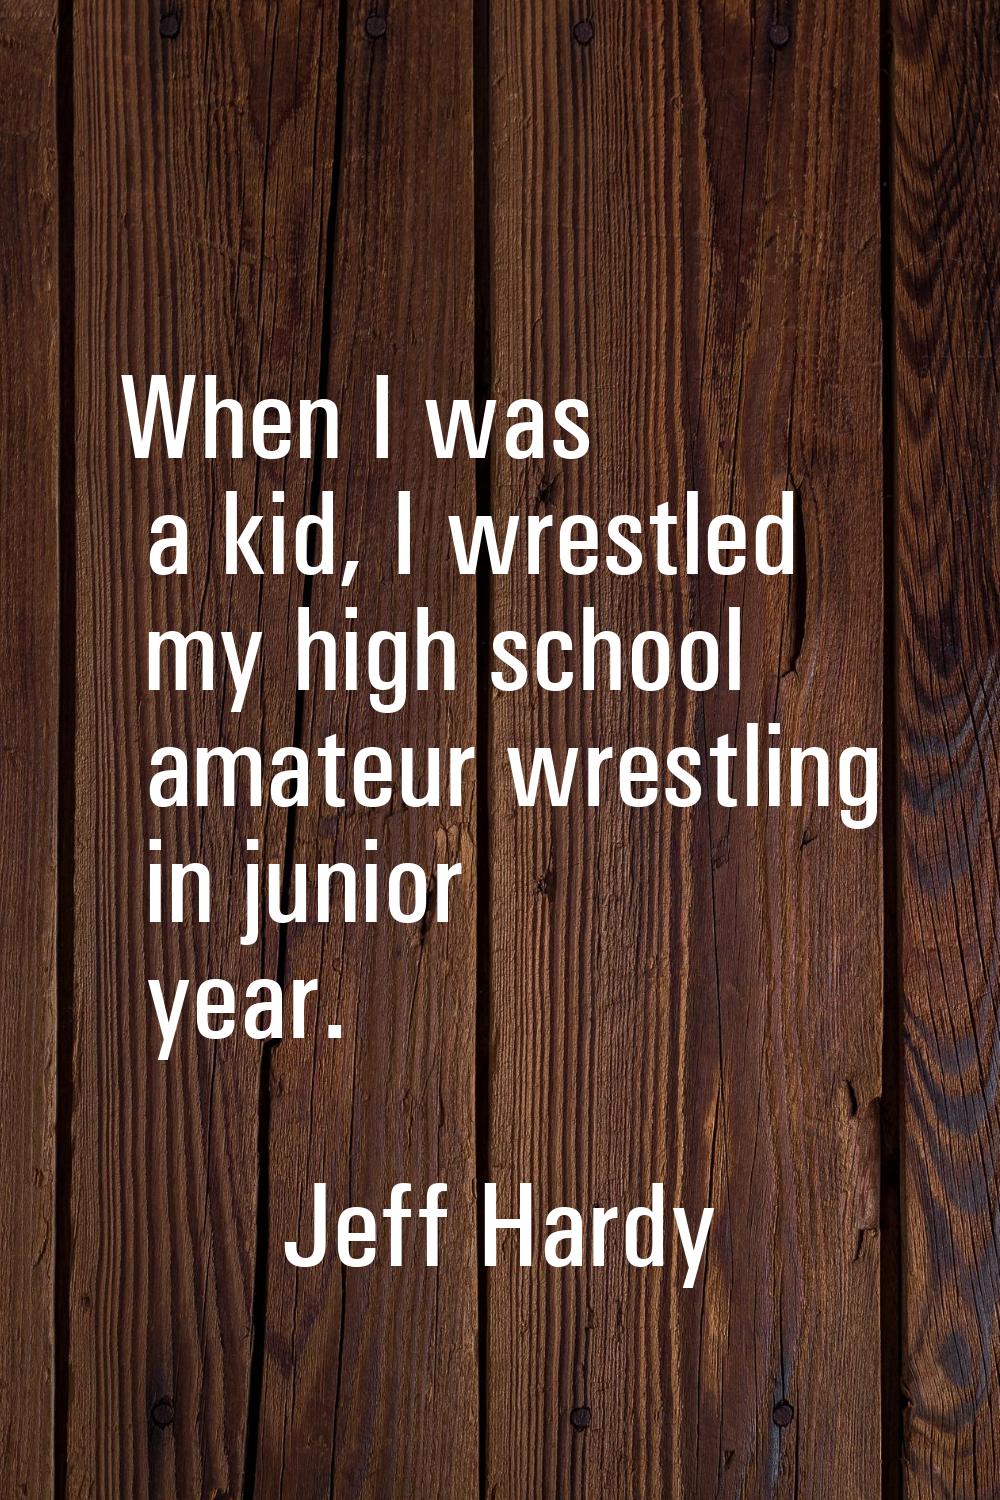 When I was a kid, I wrestled my high school amateur wrestling in junior year.